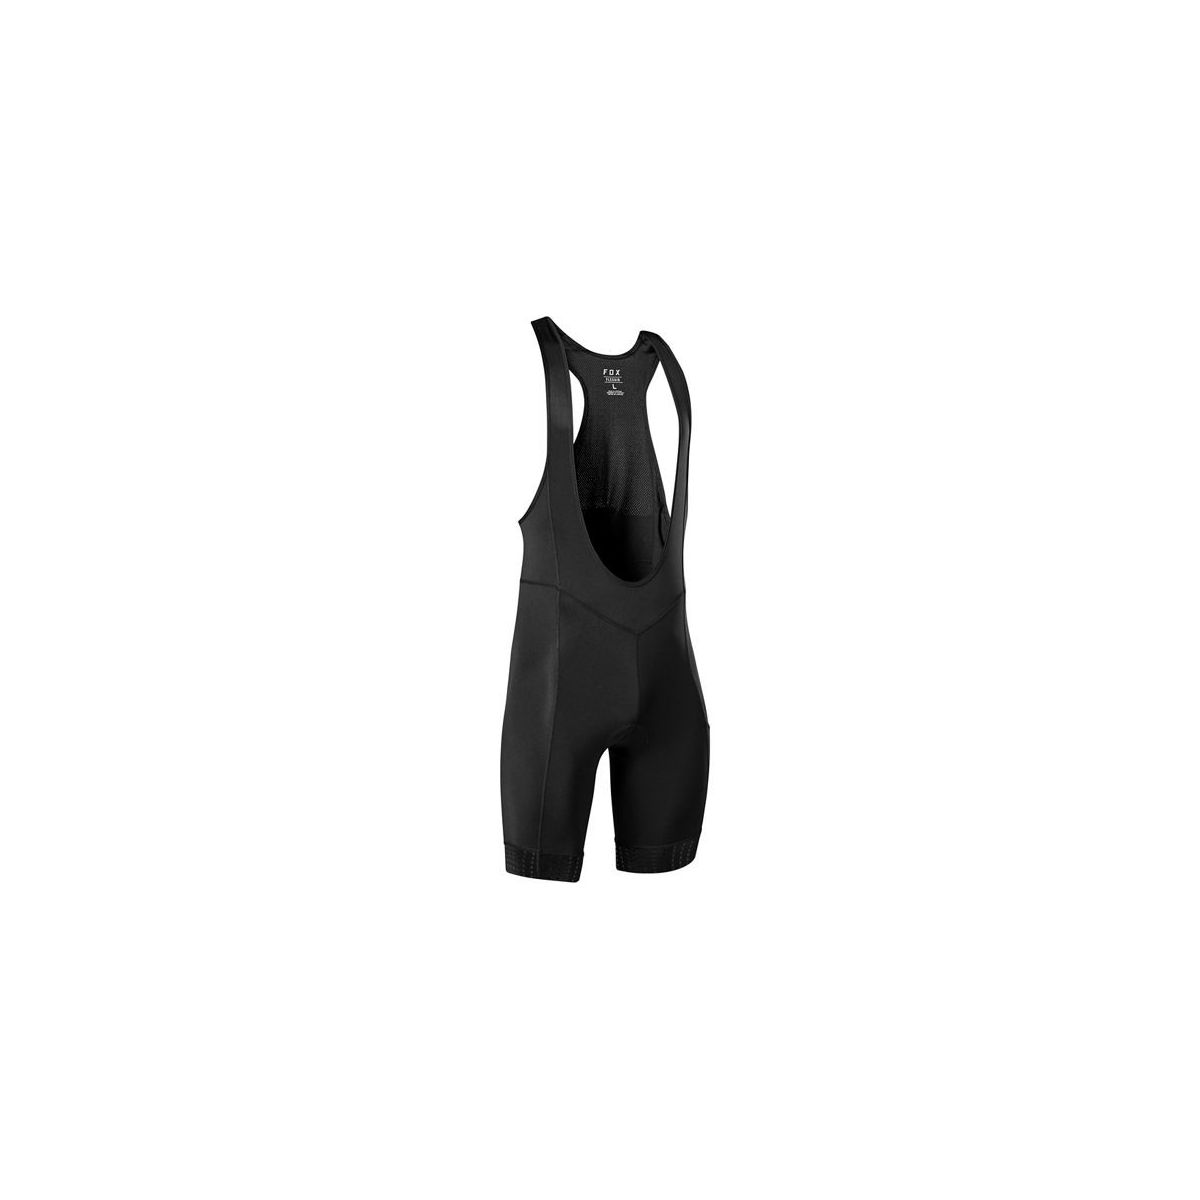 Culotte corto con tirantes Fox Tecbase en color negro